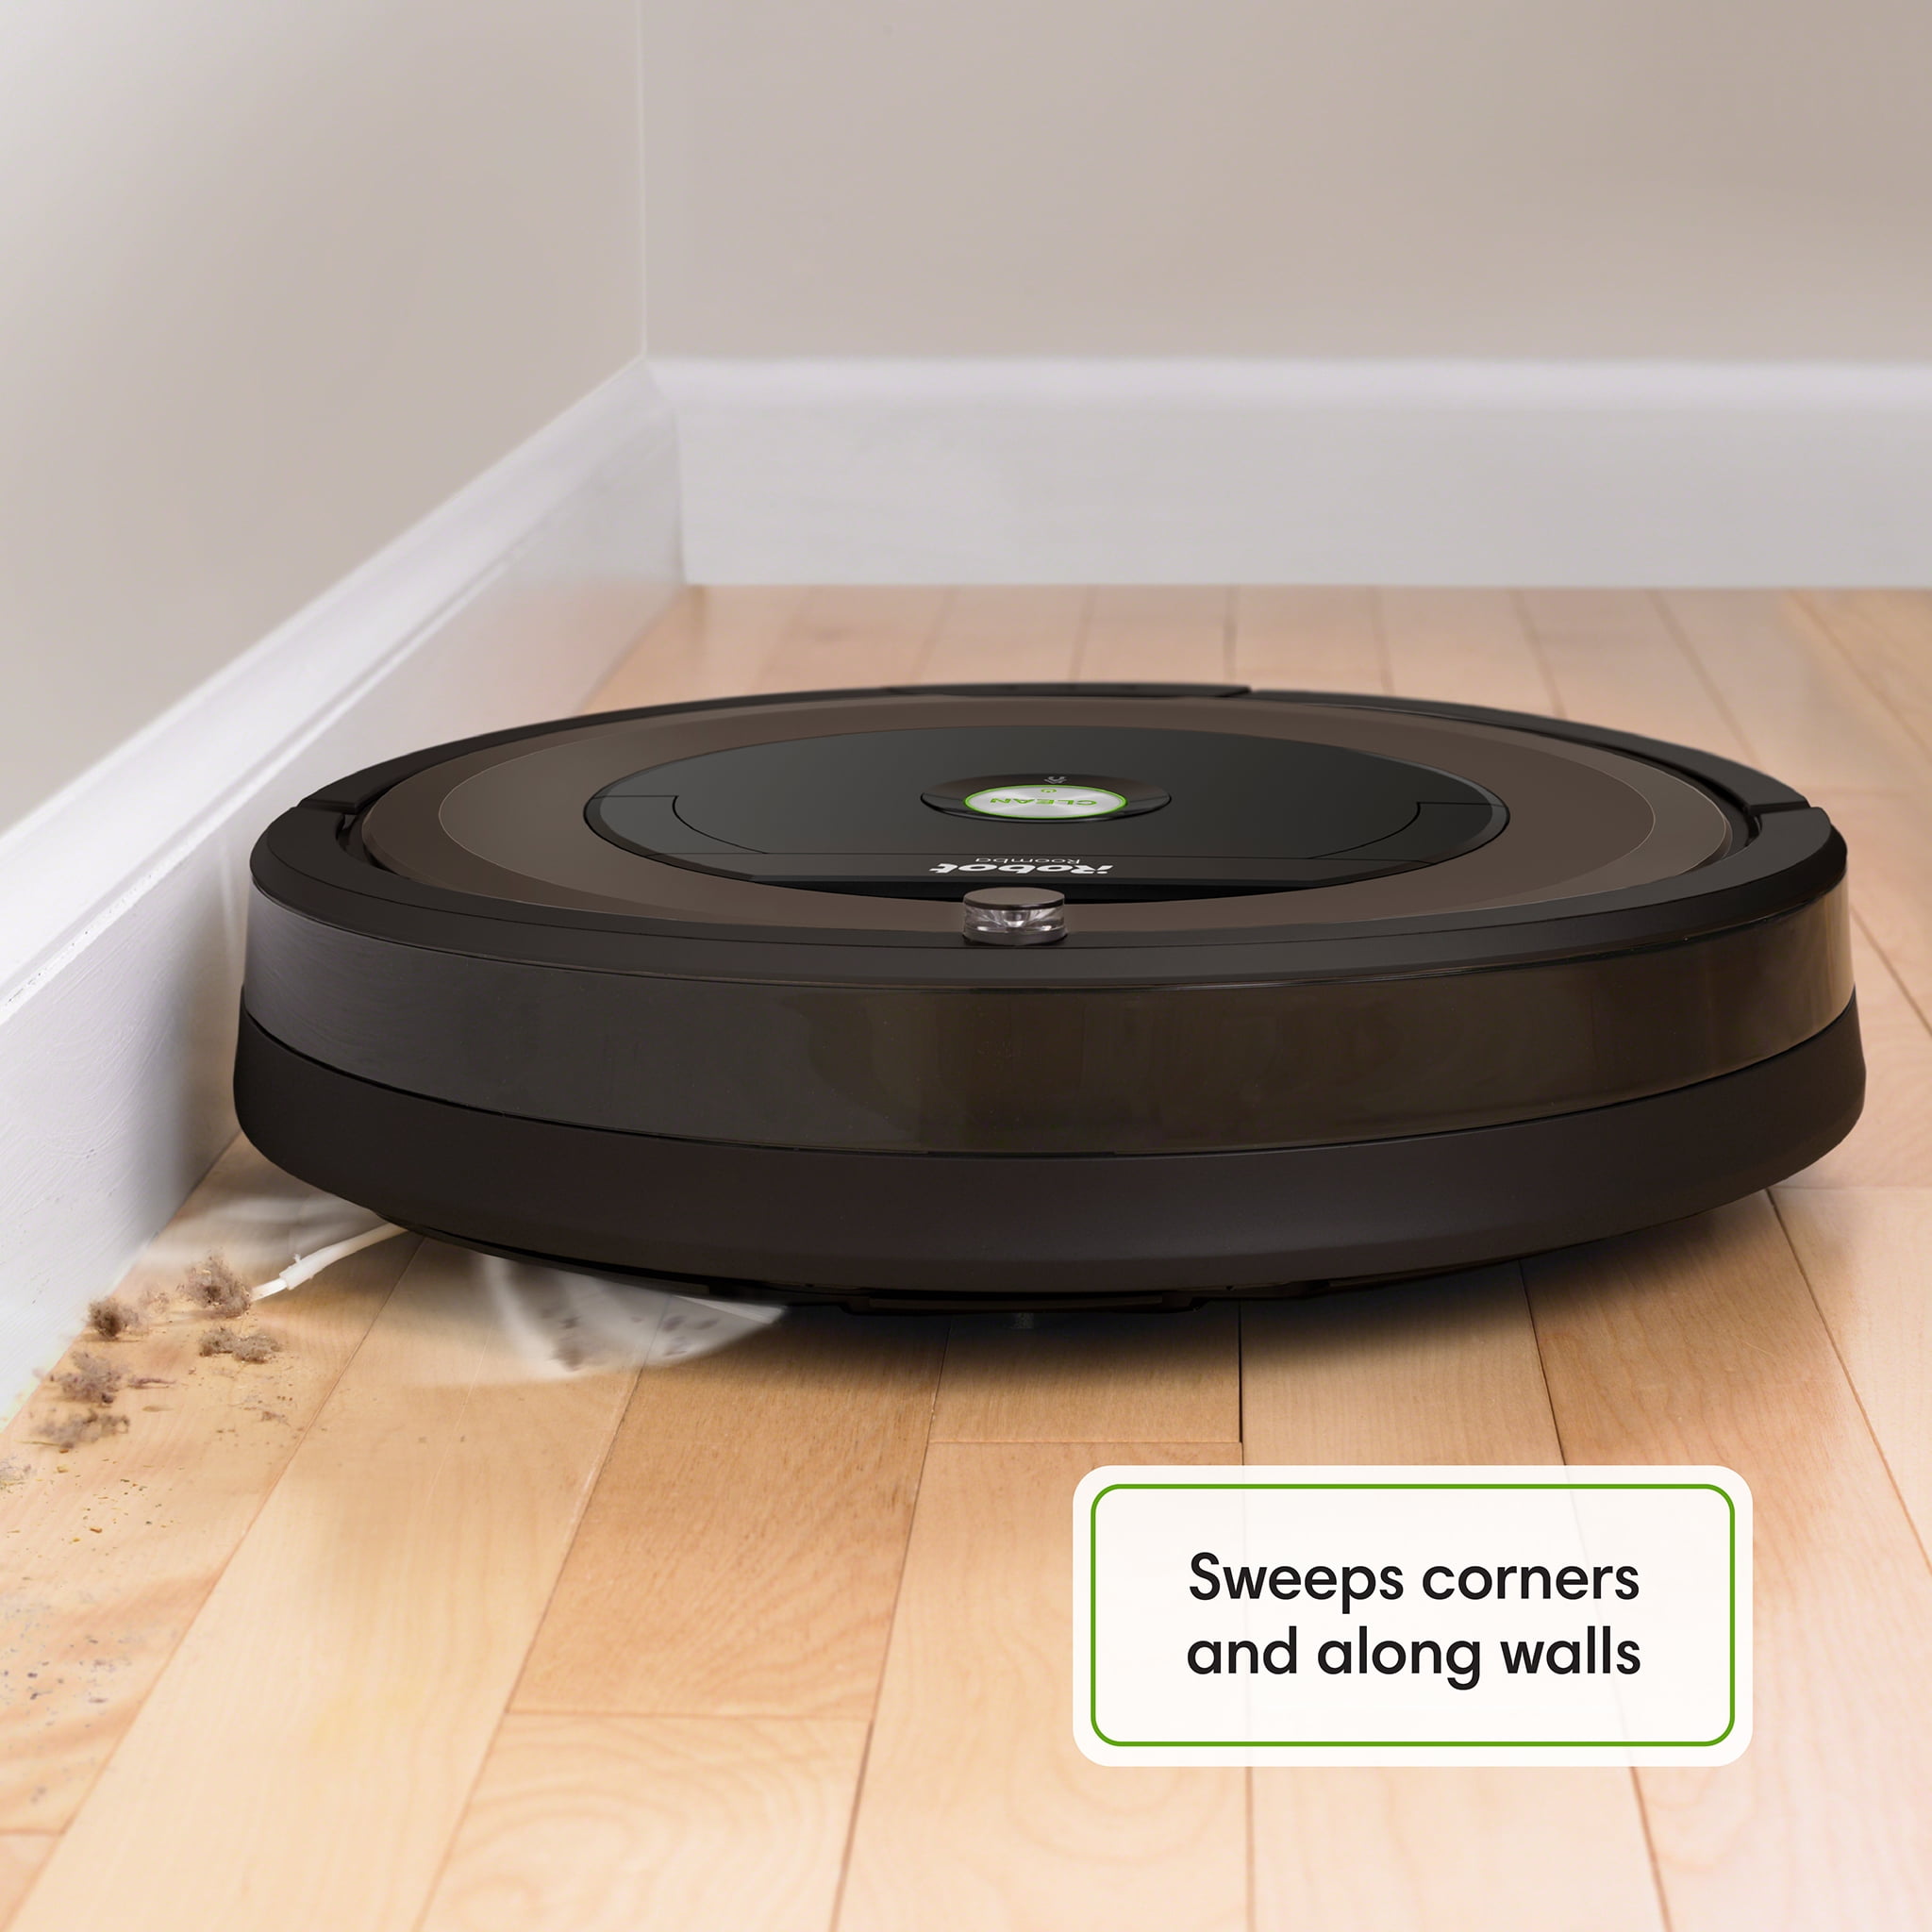 Irobot Roomba 890 Robot Vacuum Wi Fi, Irobot For Hardwood Floors